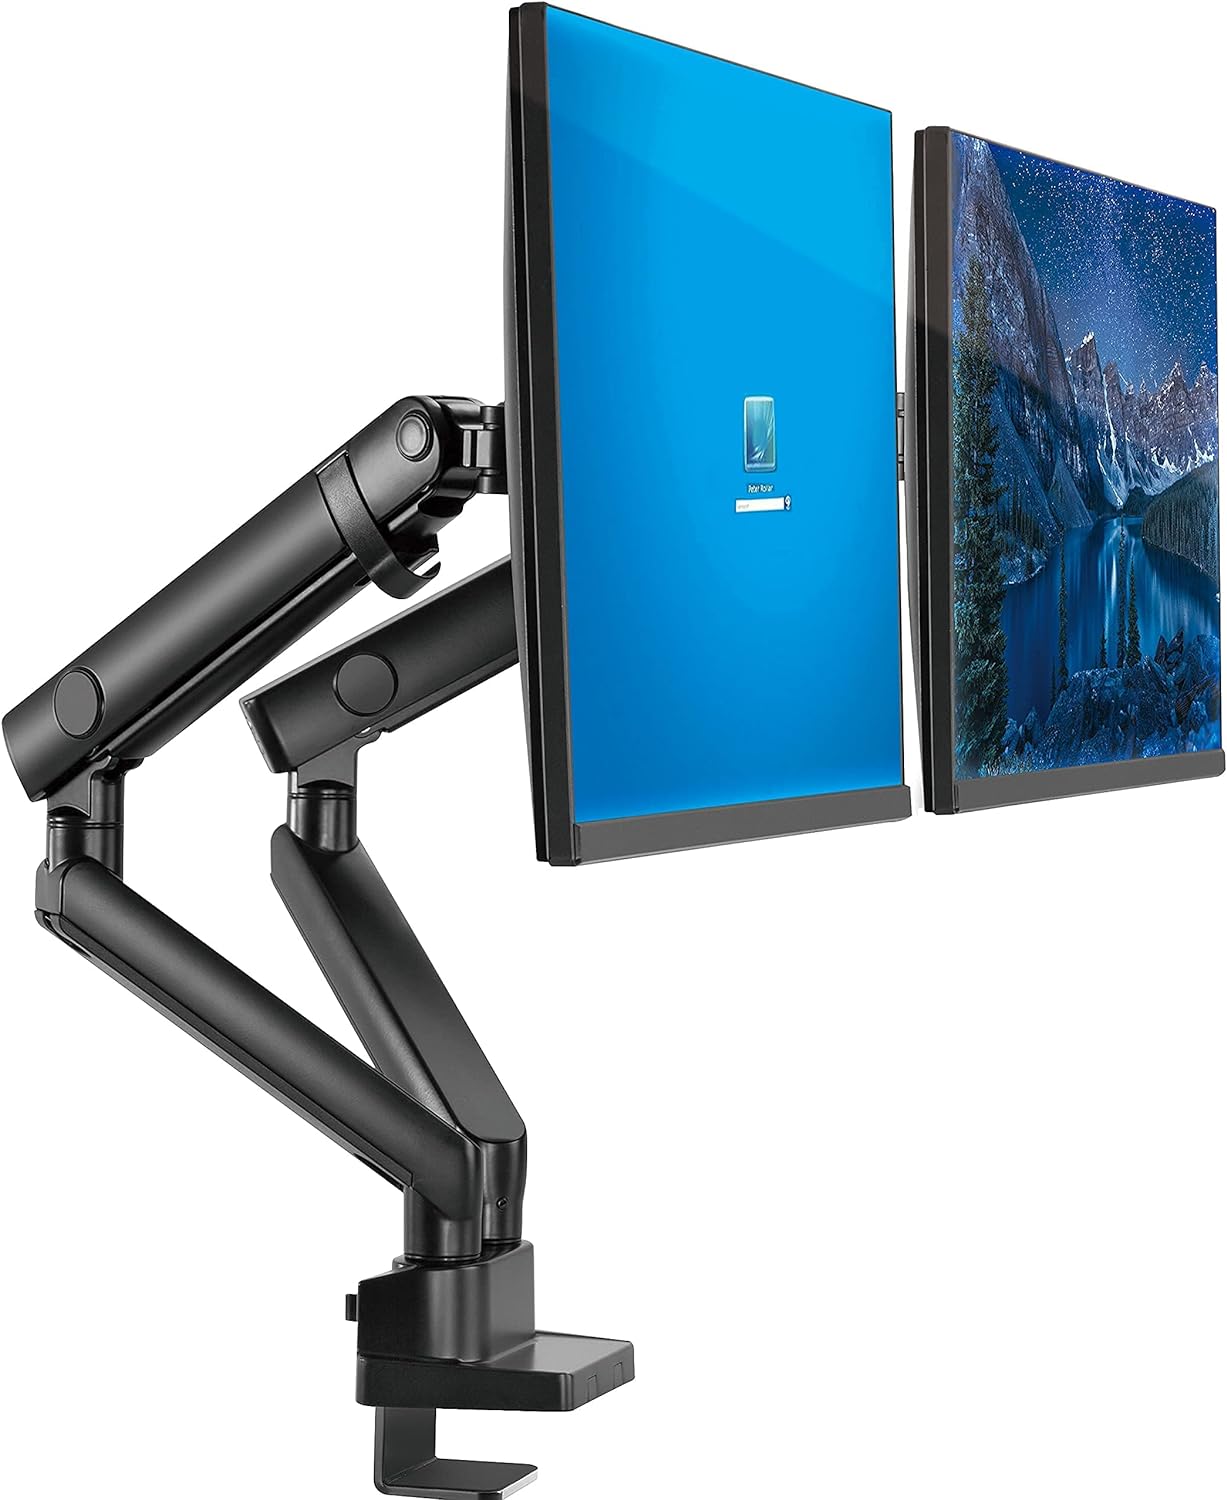 Lifelong Dual Monitor Stand, Dual Monitor Arm Mount